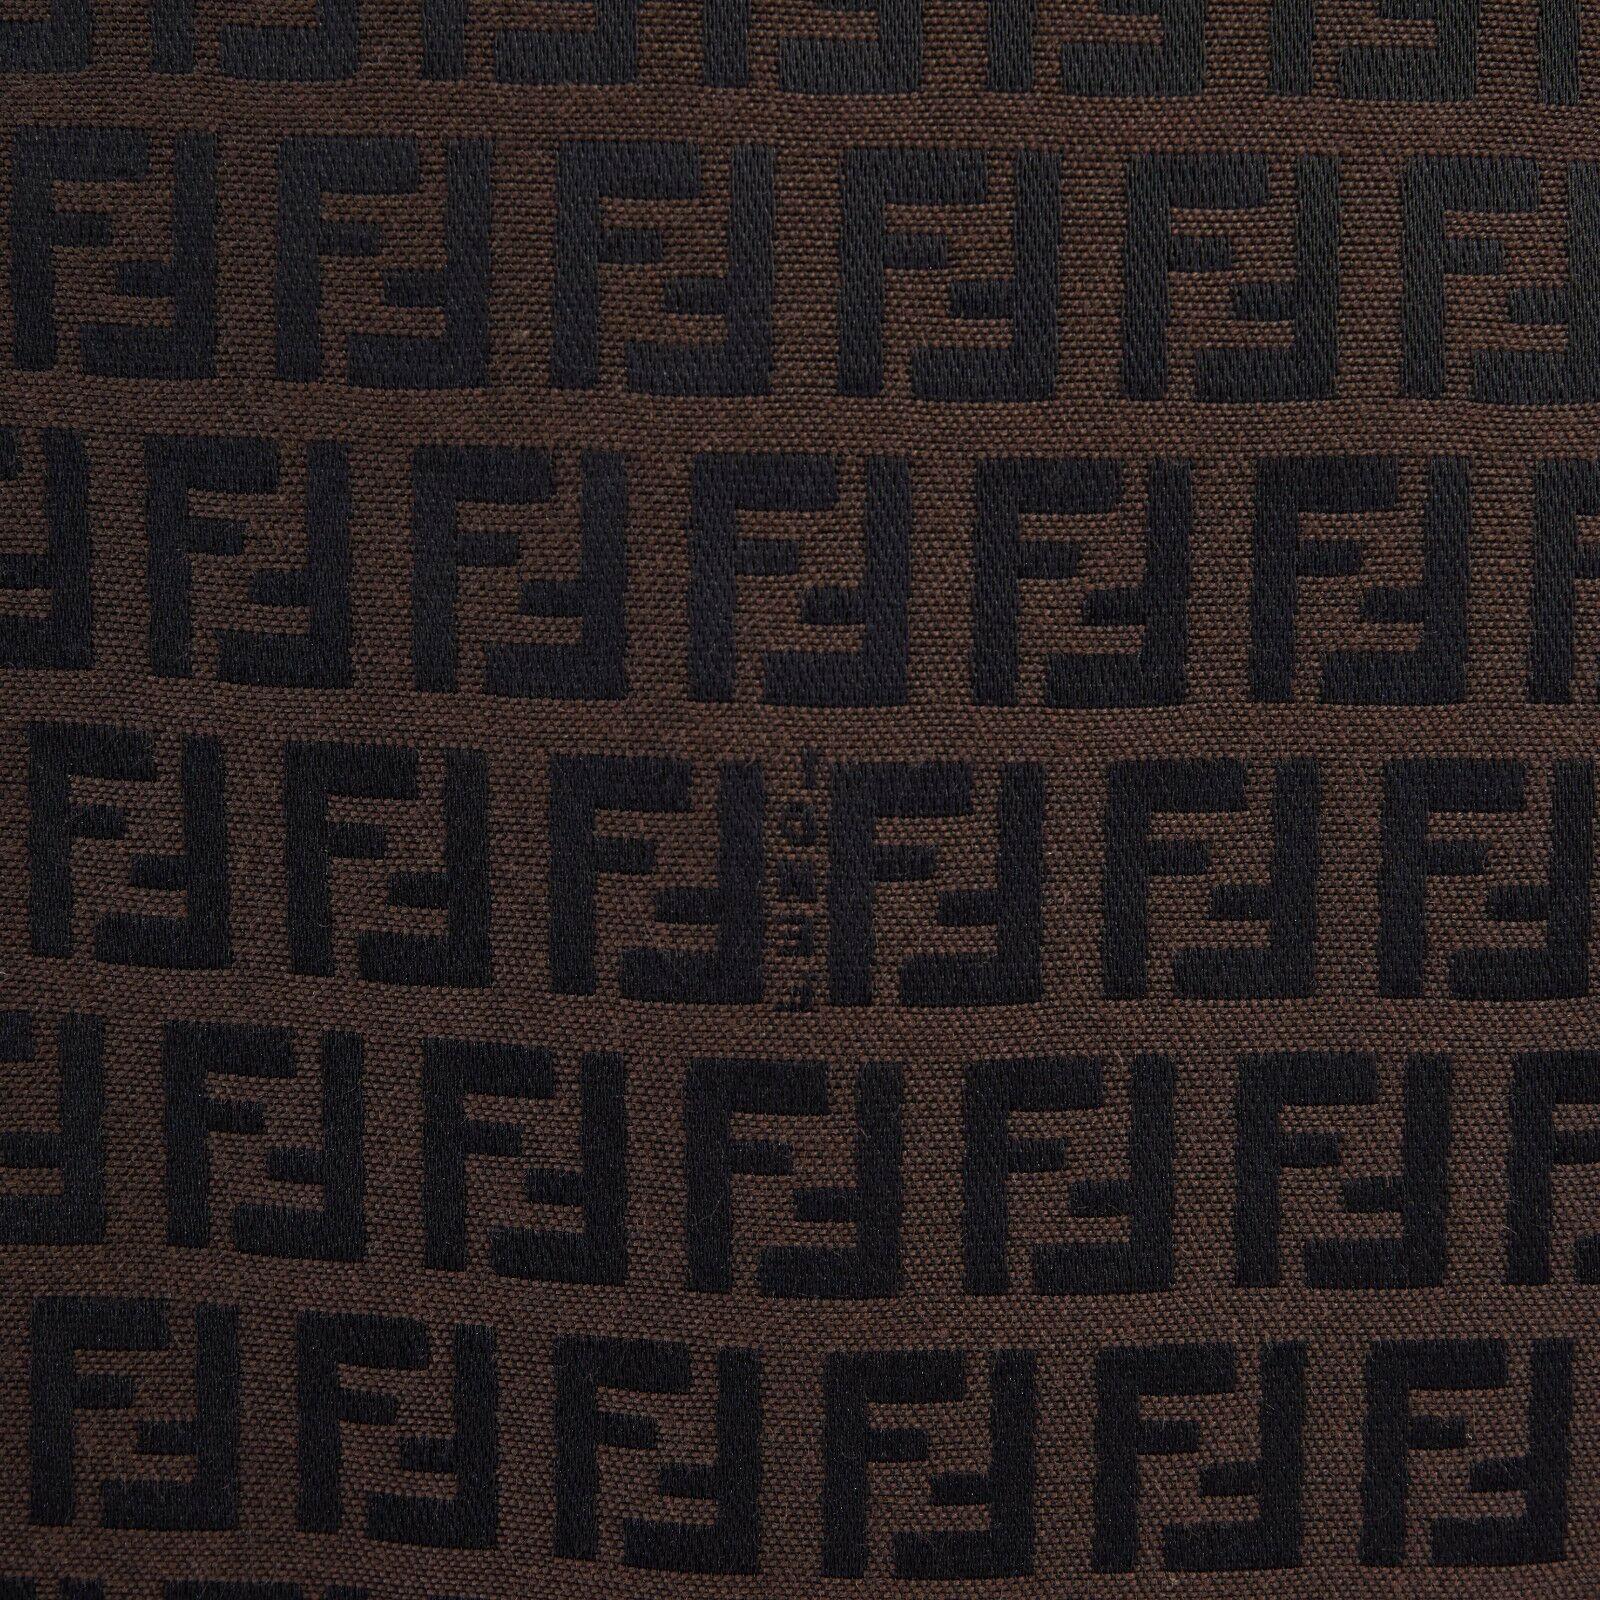 FENDI brown FF monogram jacquard slit back knee length pencil skirt IT40
Brand: Fendi
Designer: Karl Lagerfeld
Model Name / Style: Monogram skirt
Material: Polyester, cotton
Color: Brown
Pattern: Other
Closure: Zip
Extra Detail: Mid rise.
Made in: